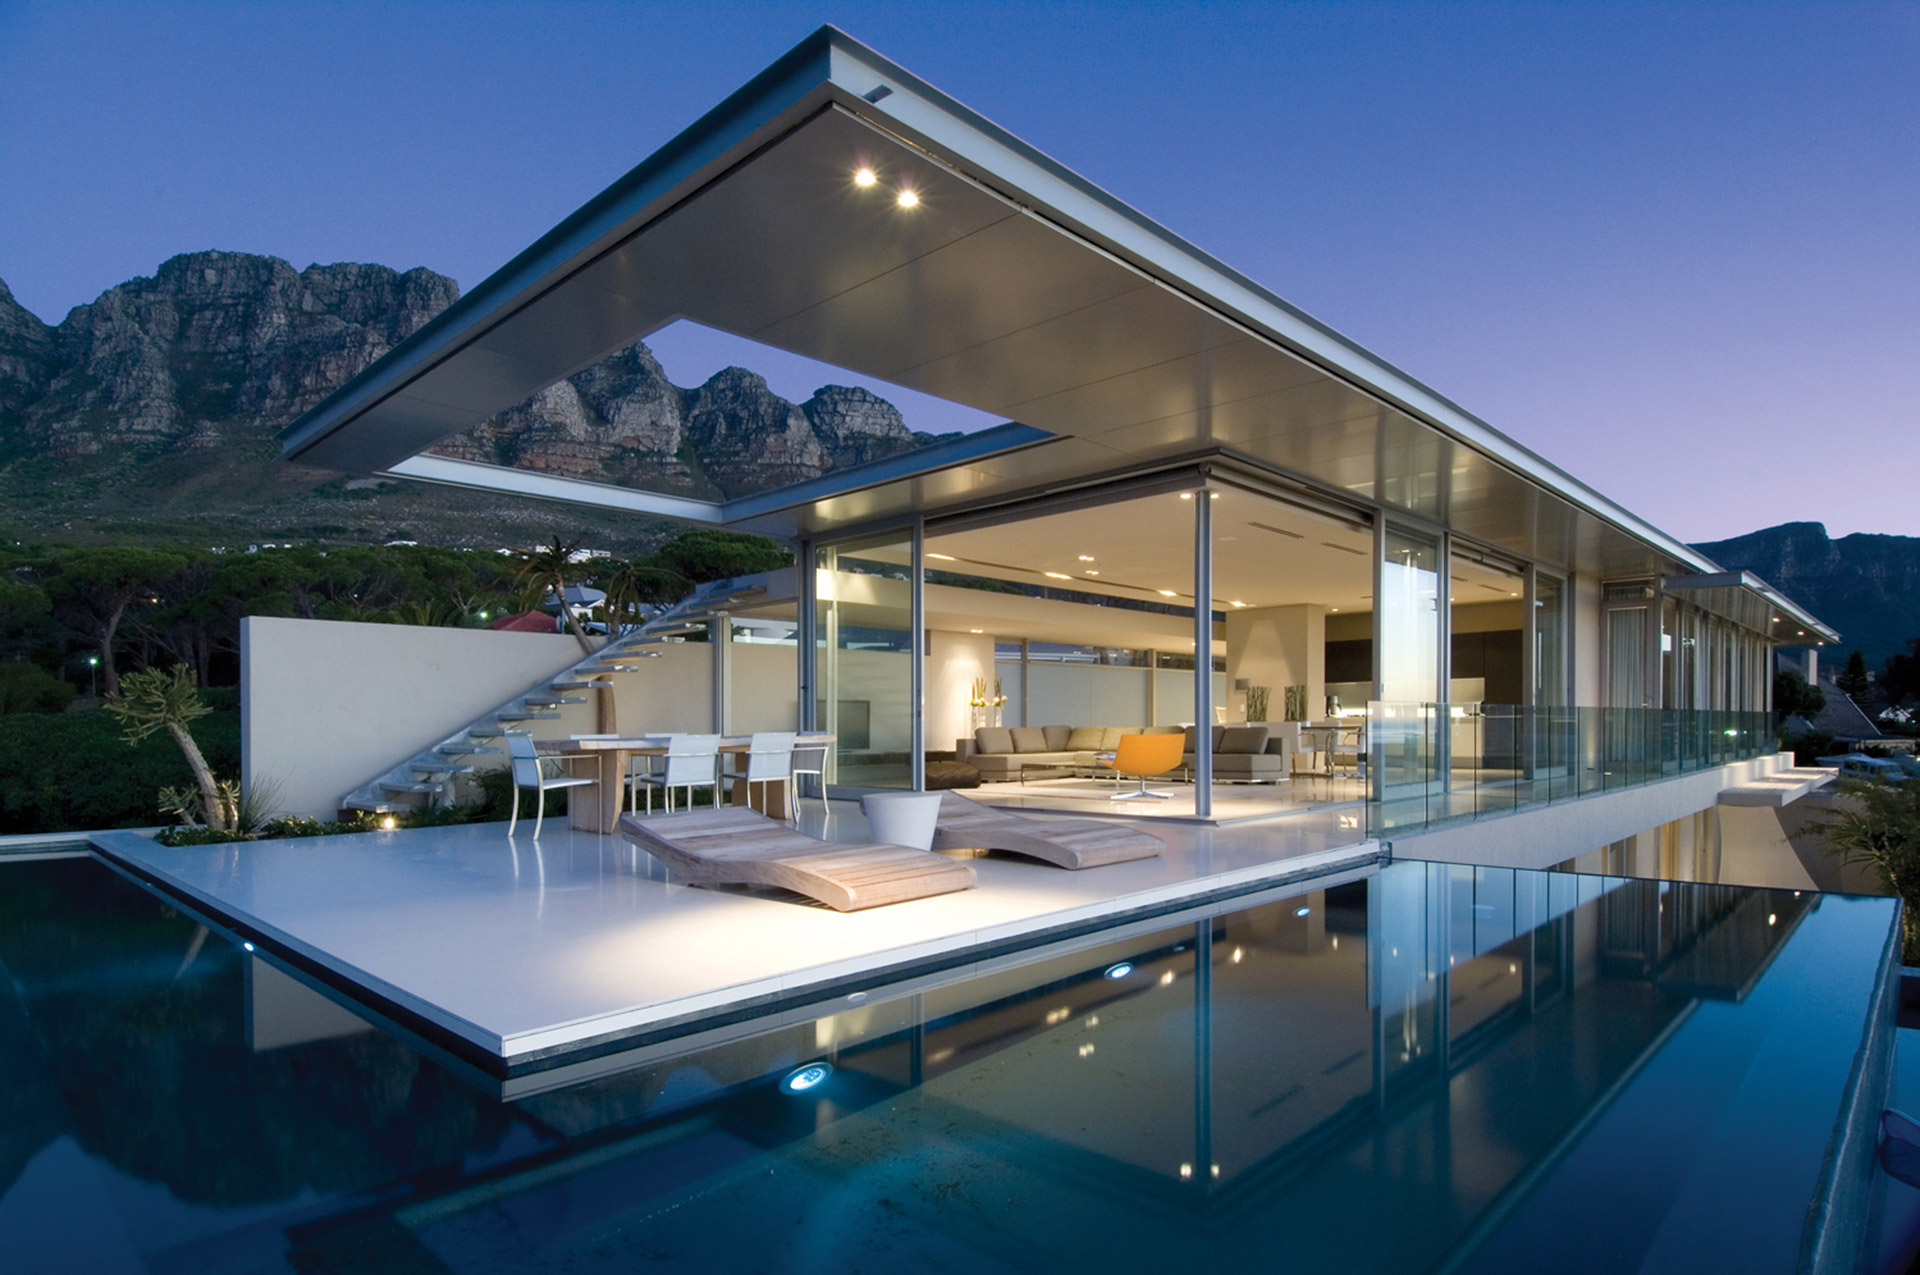 Cape Town Mountains House Swimming Pool Modern Lounge Reflection Twelve Apostles Table Mountain 1920x1275